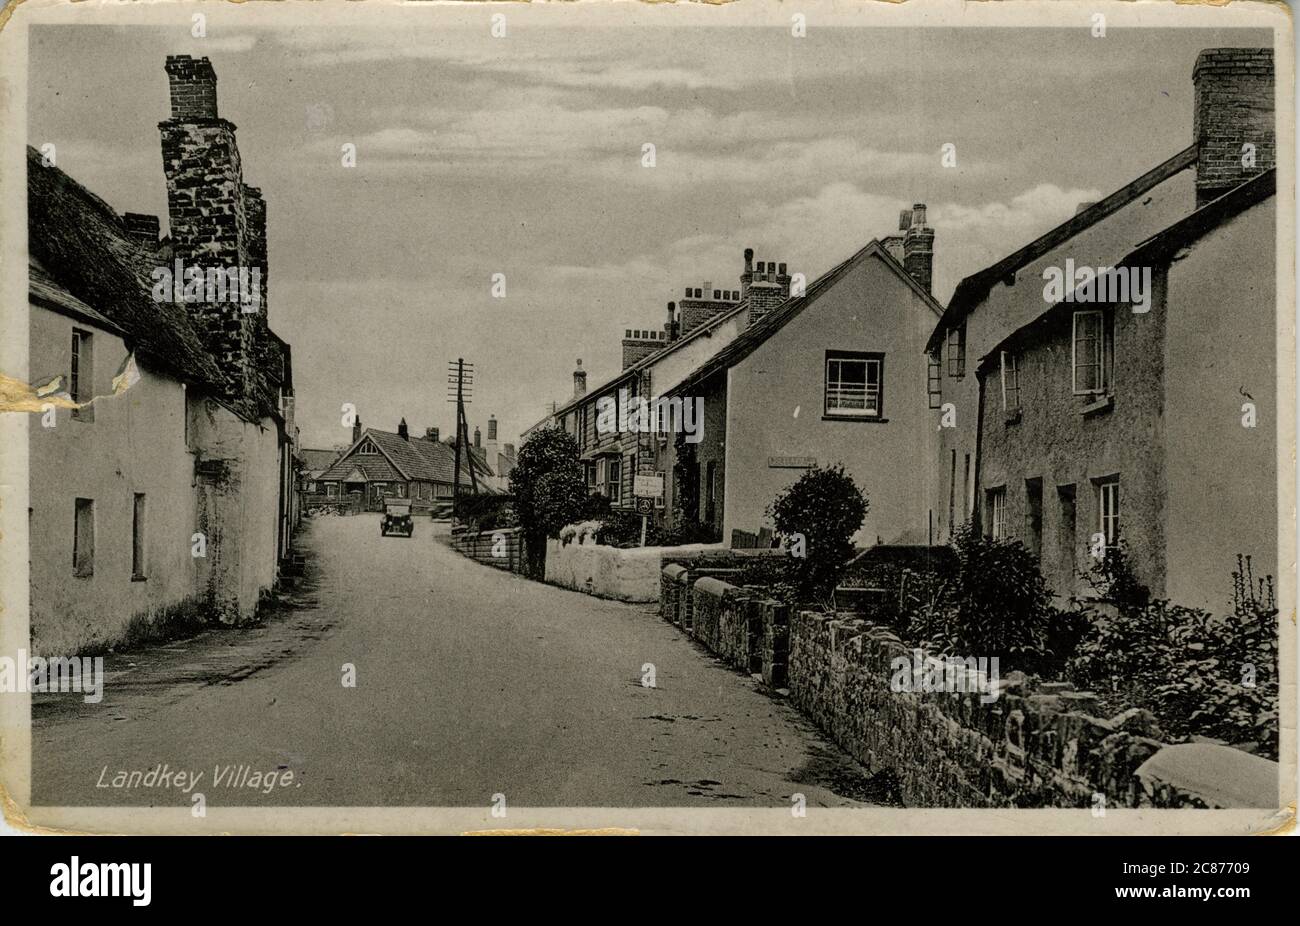 The Village, Landkey, Devon, Inglaterra. 1936 Foto de stock